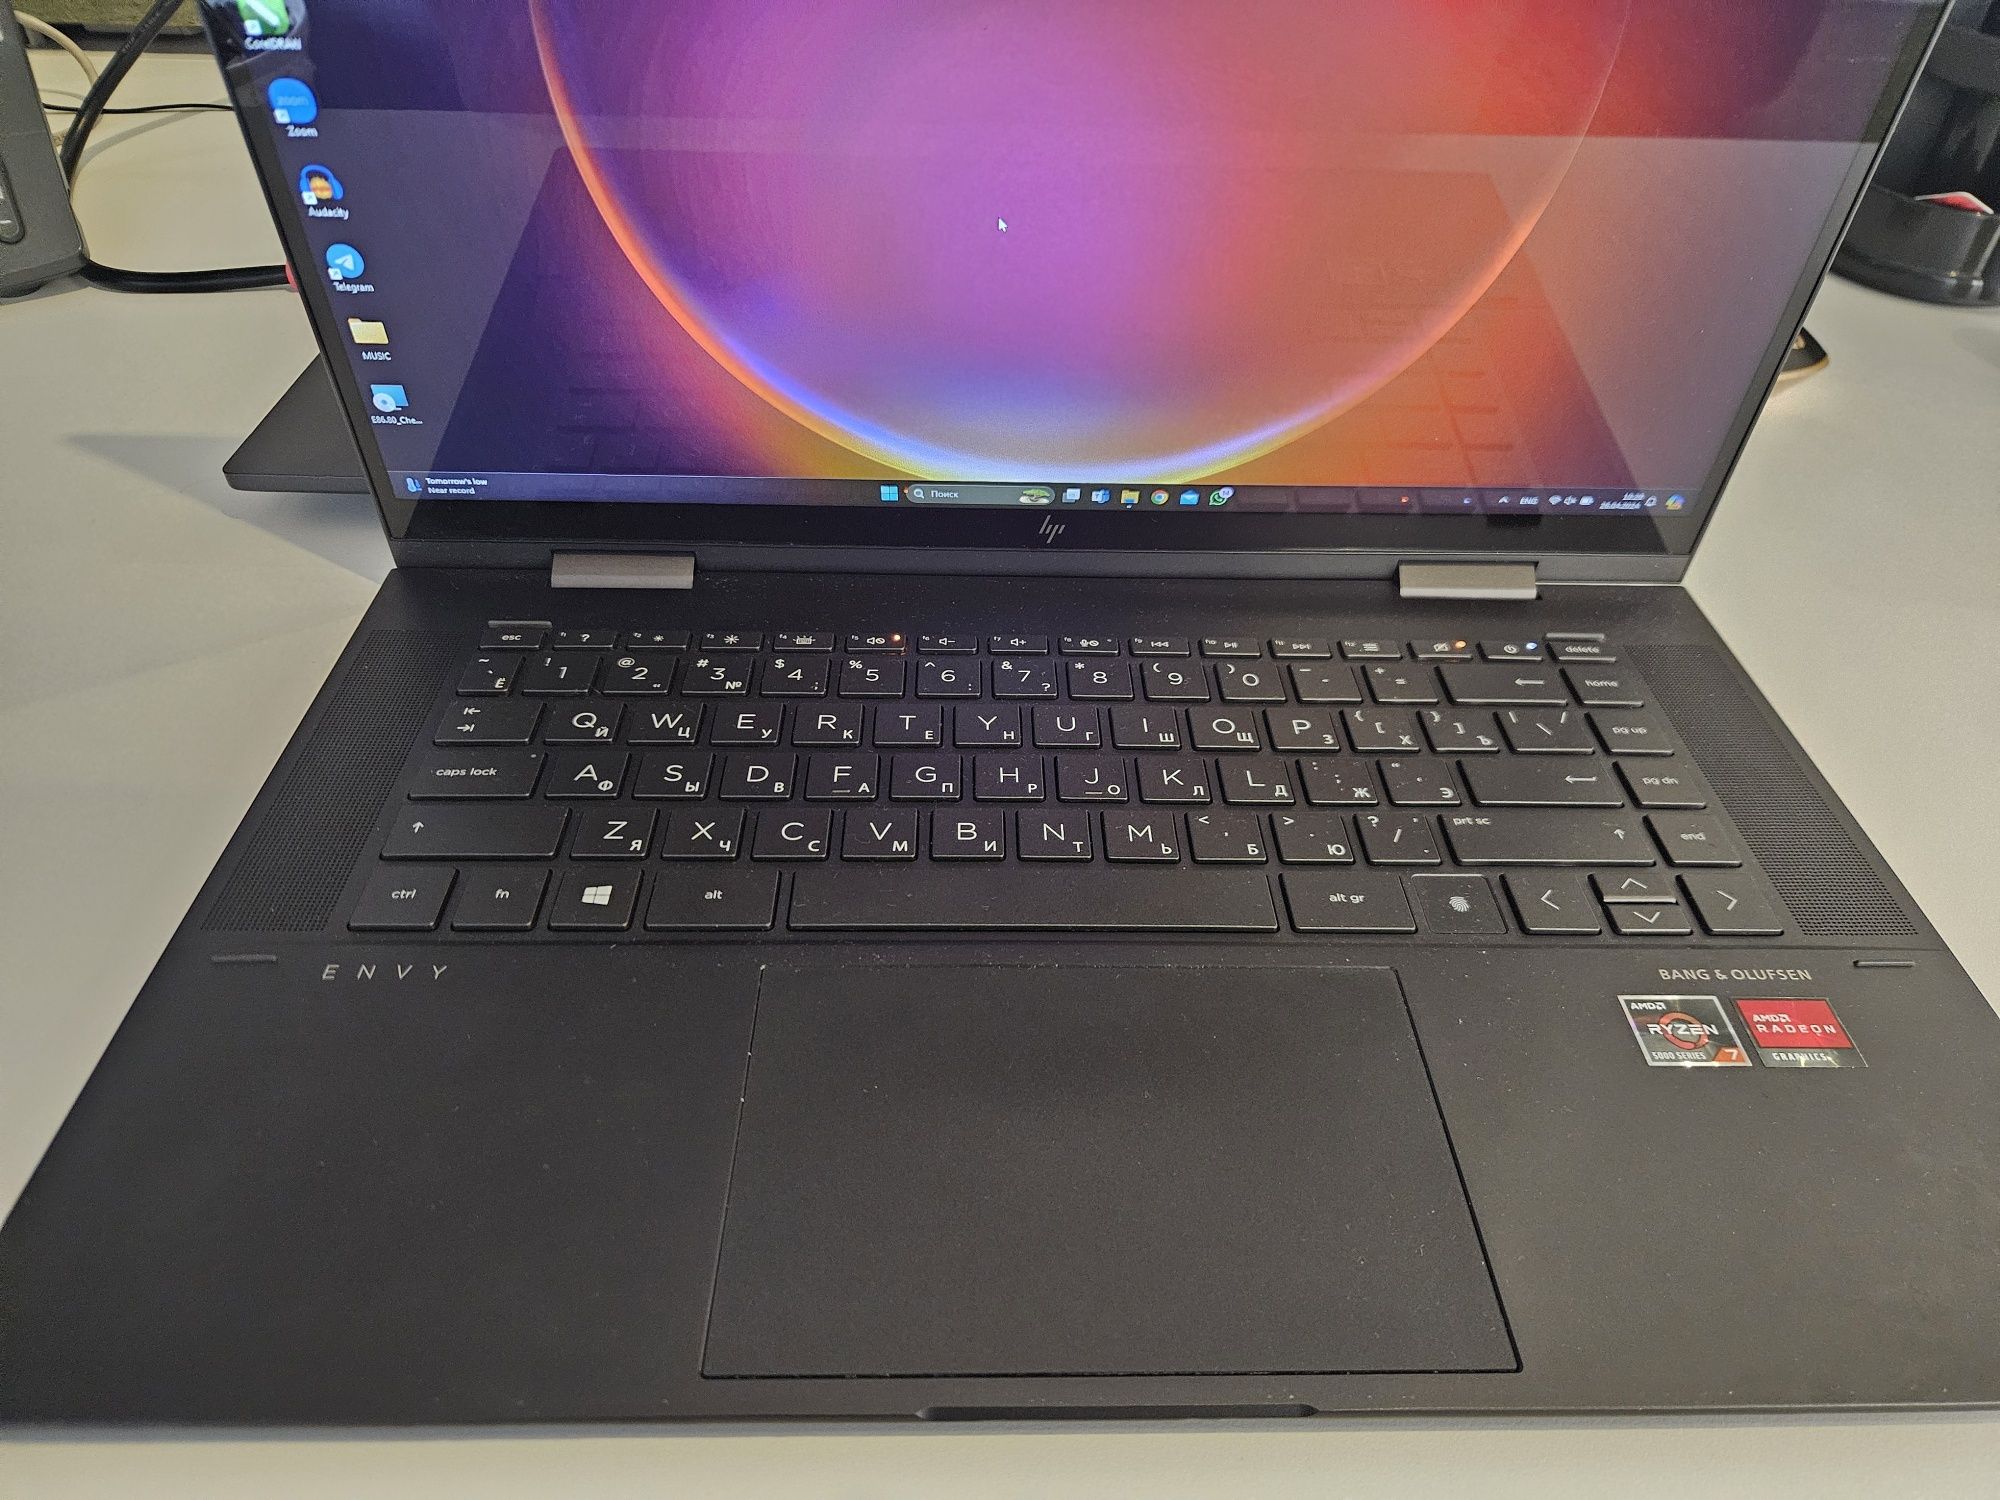 Ноутбук HP Envy x360